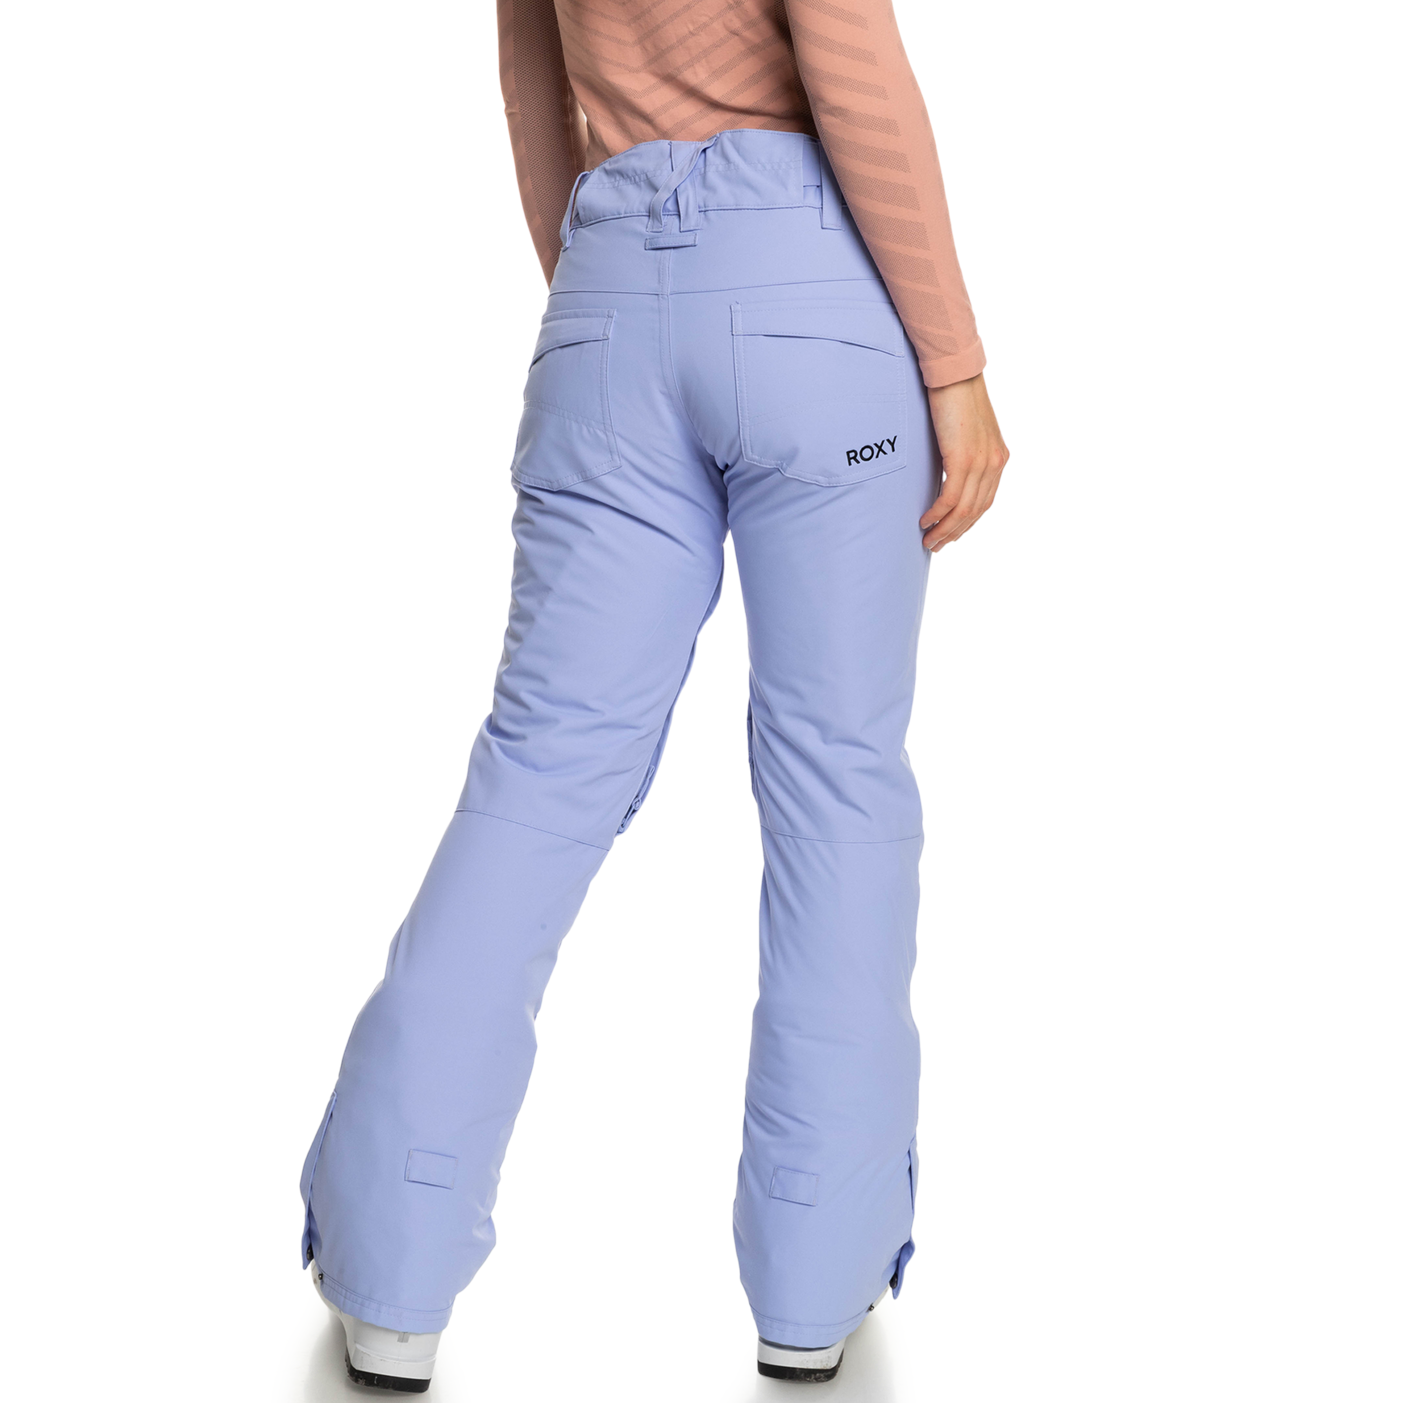 Roxy Backyard Pant - Girl's - 2020 model